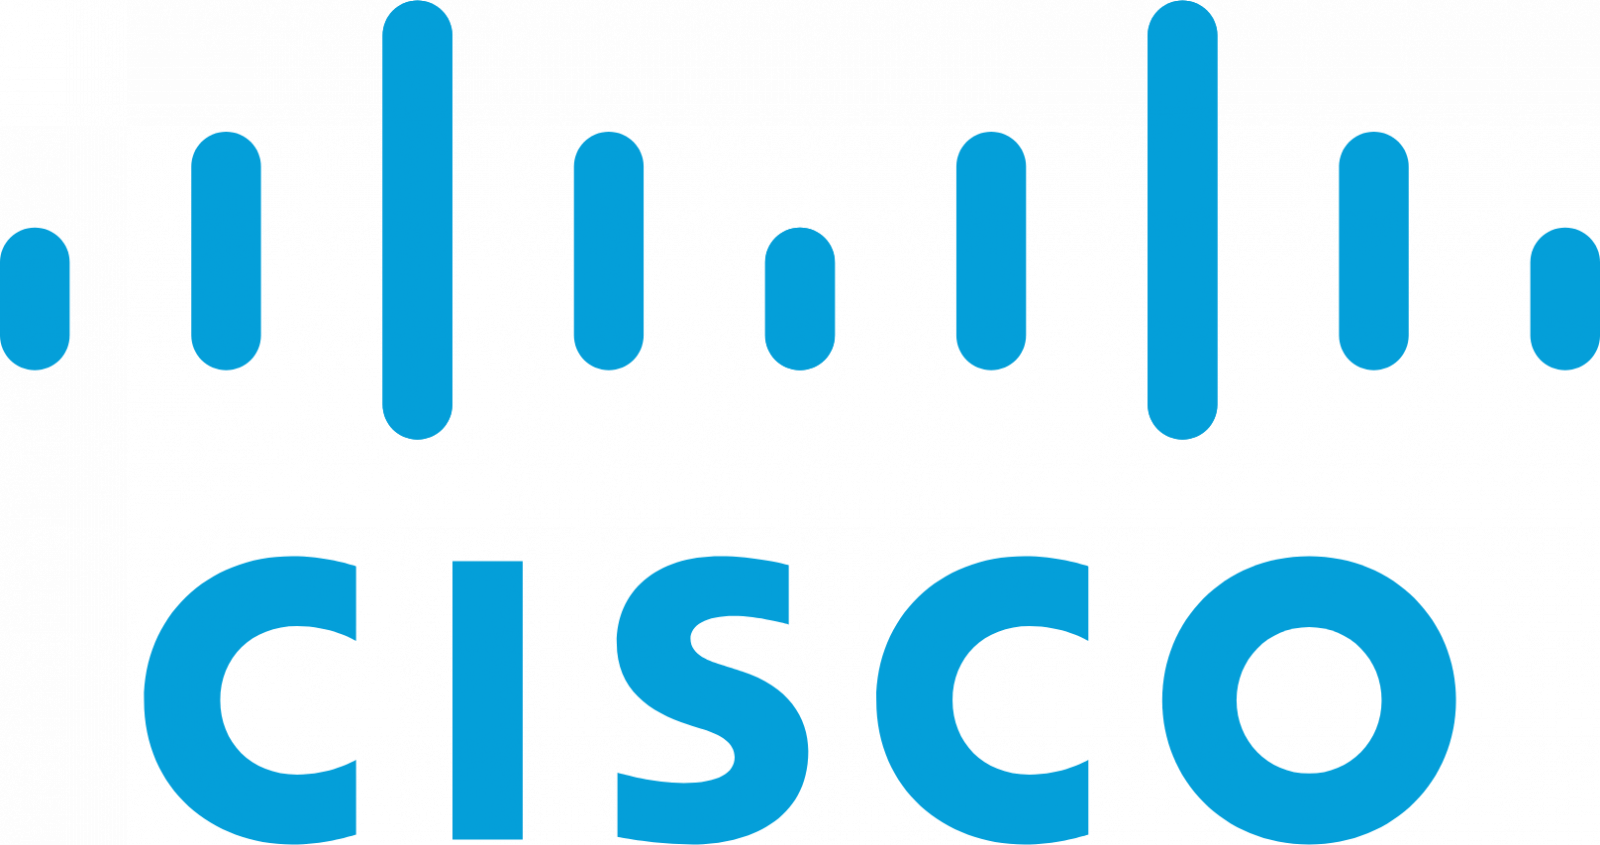 Cisco It companies in Dubai